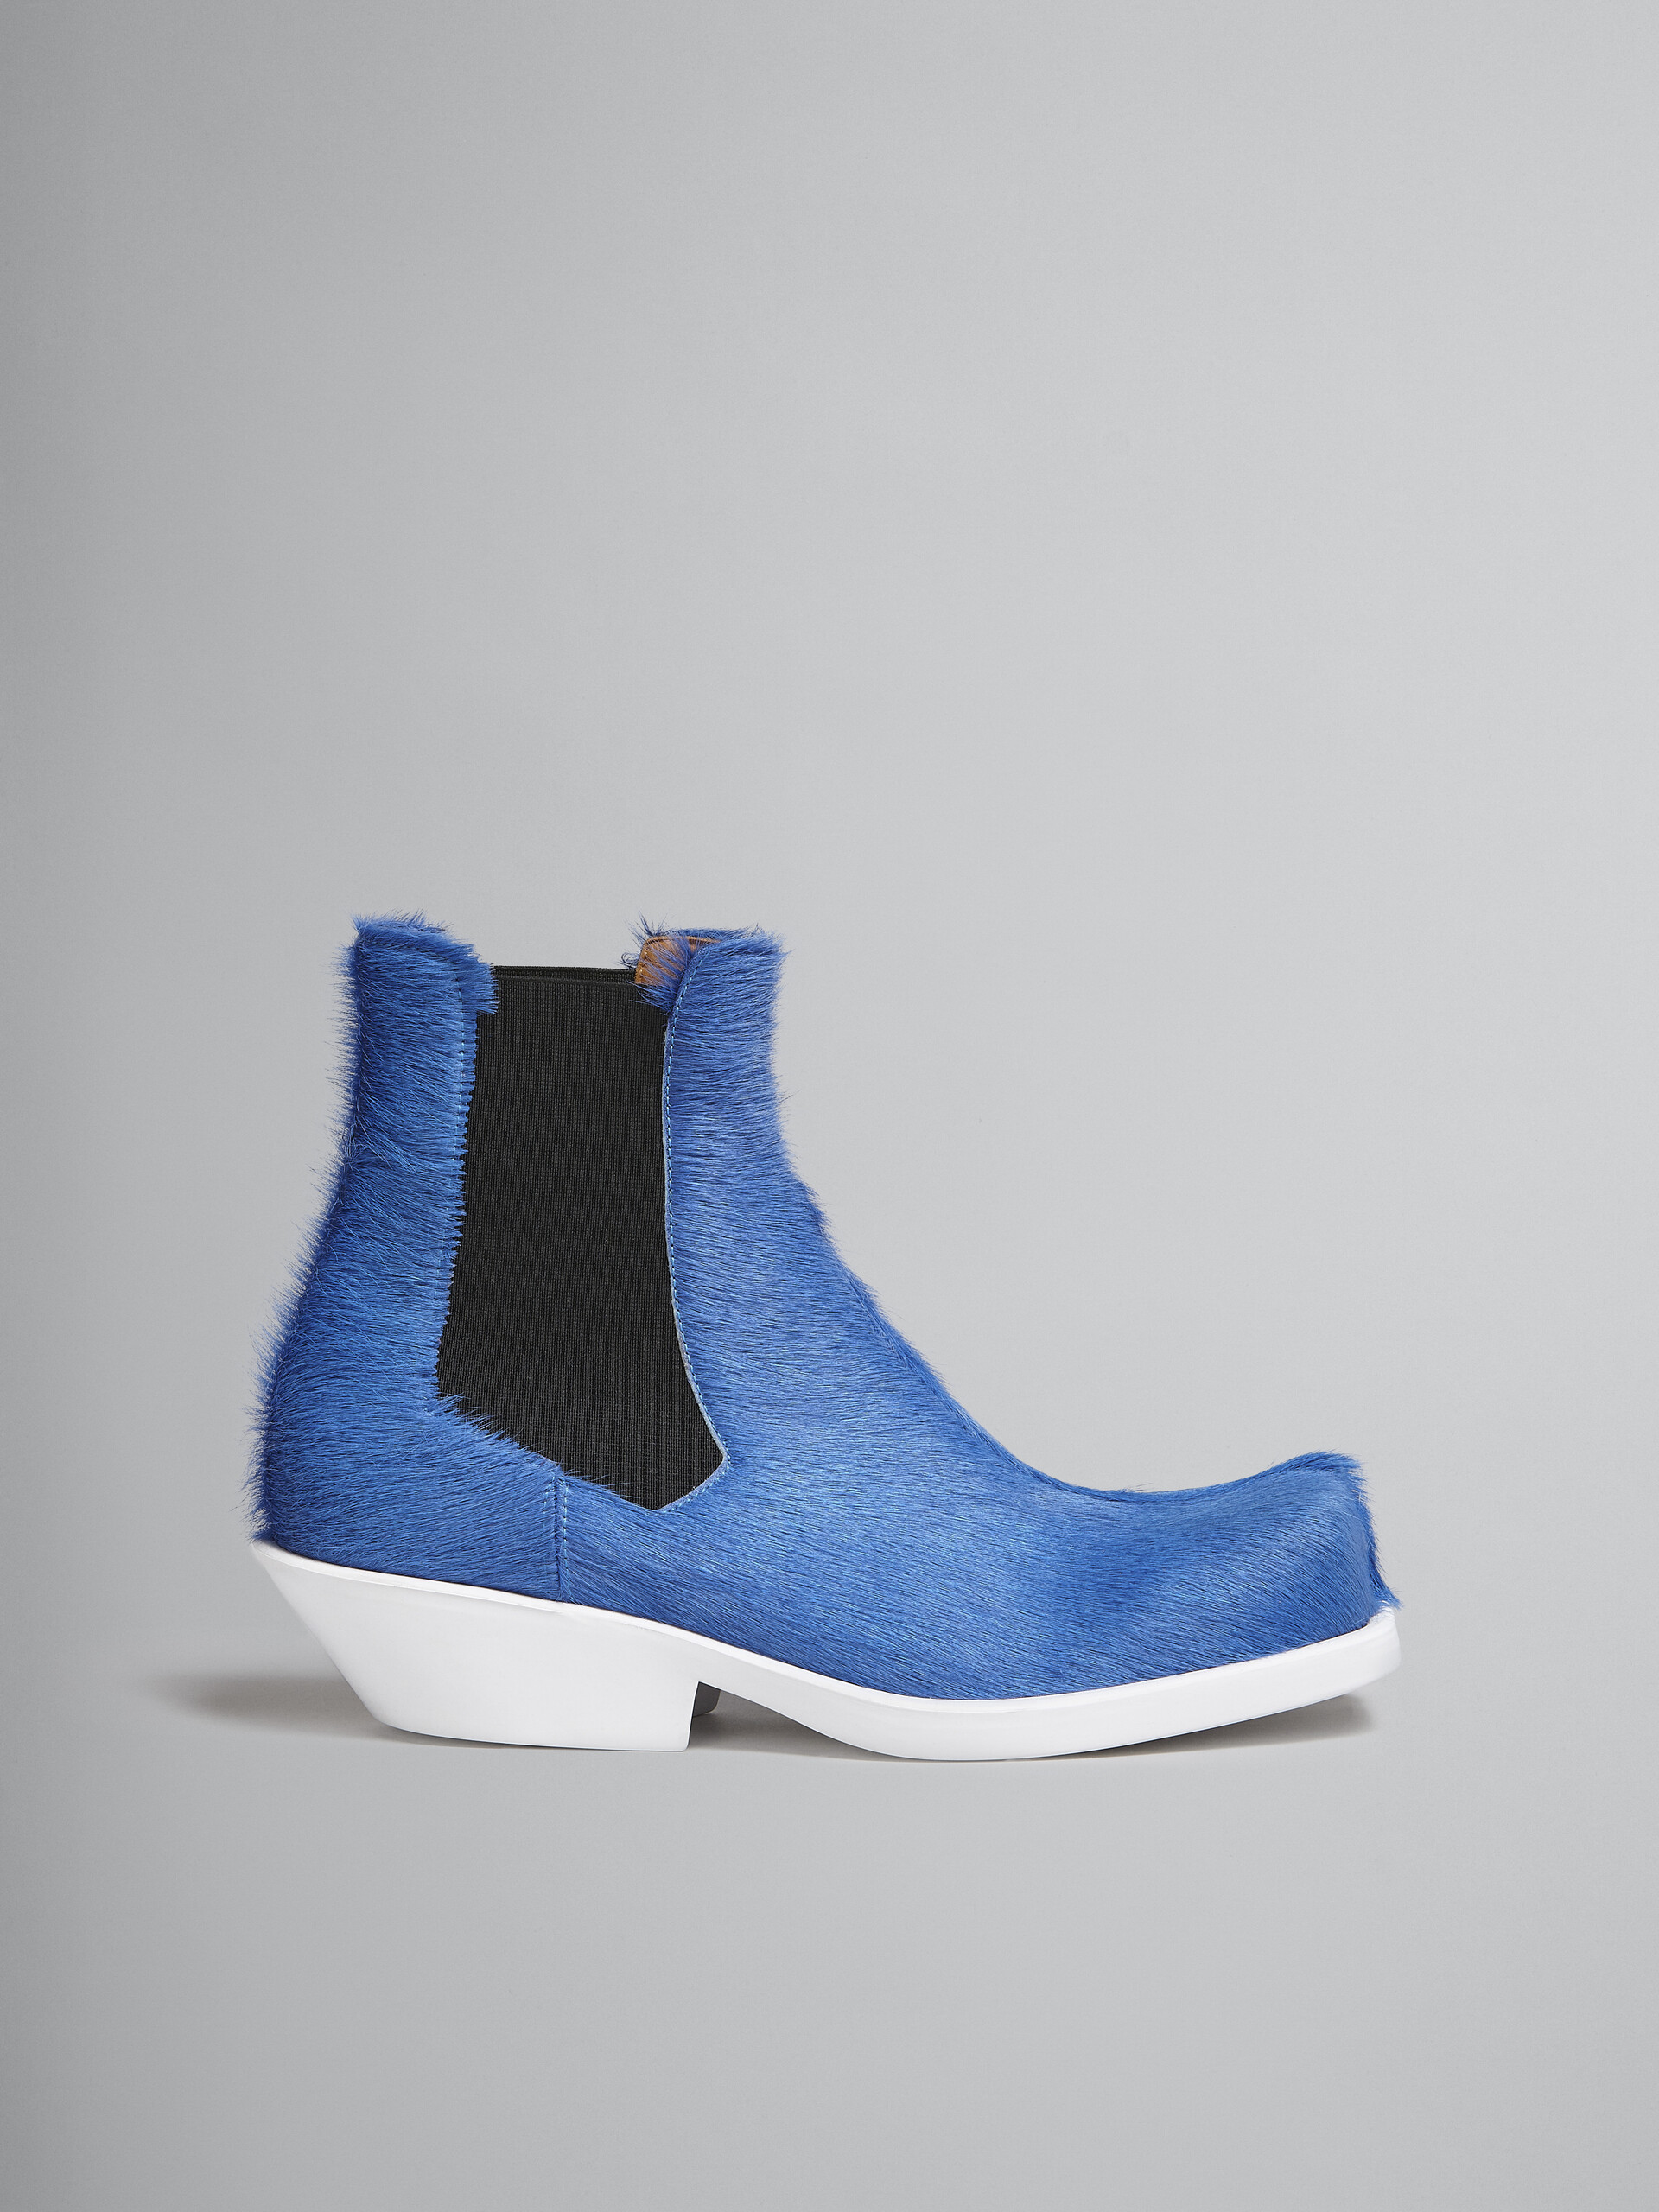 Blue long hair calfskin Chelsea boot - Boots - Image 1